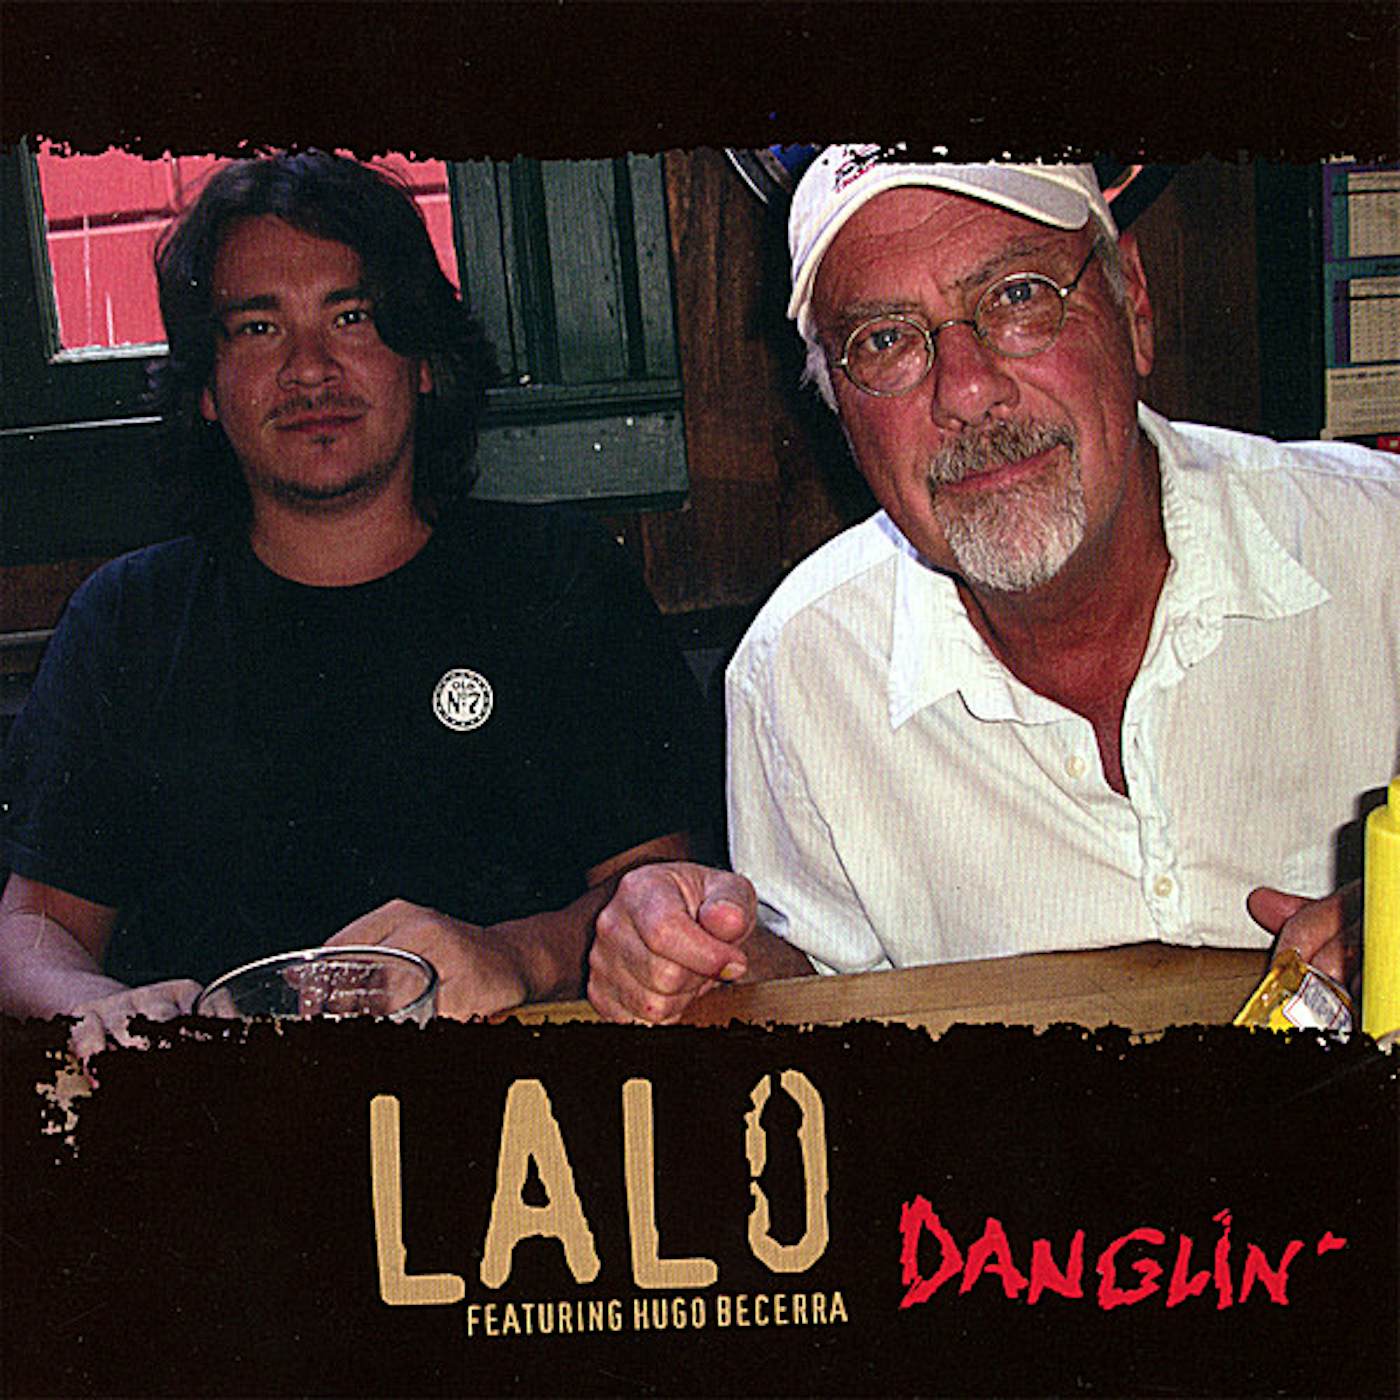 Lalo DANGLIN' CD